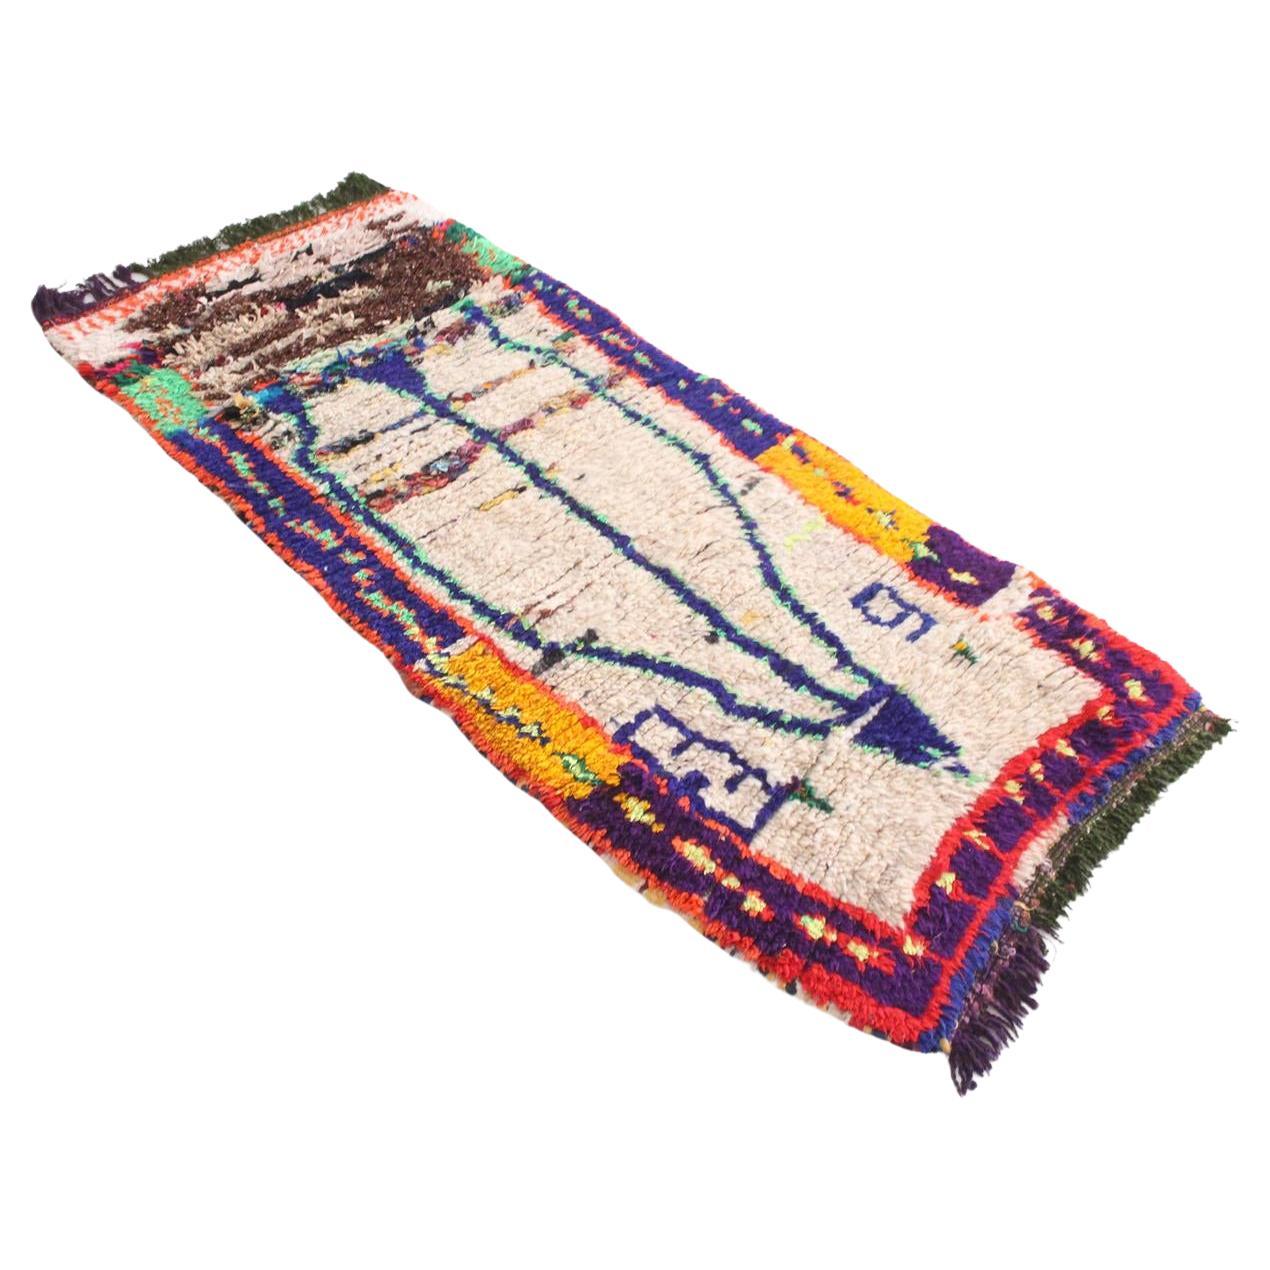 Vintage Moroccan Azilal rug - Beige/yellow/blue - 2.1x5feet / 66x155cm